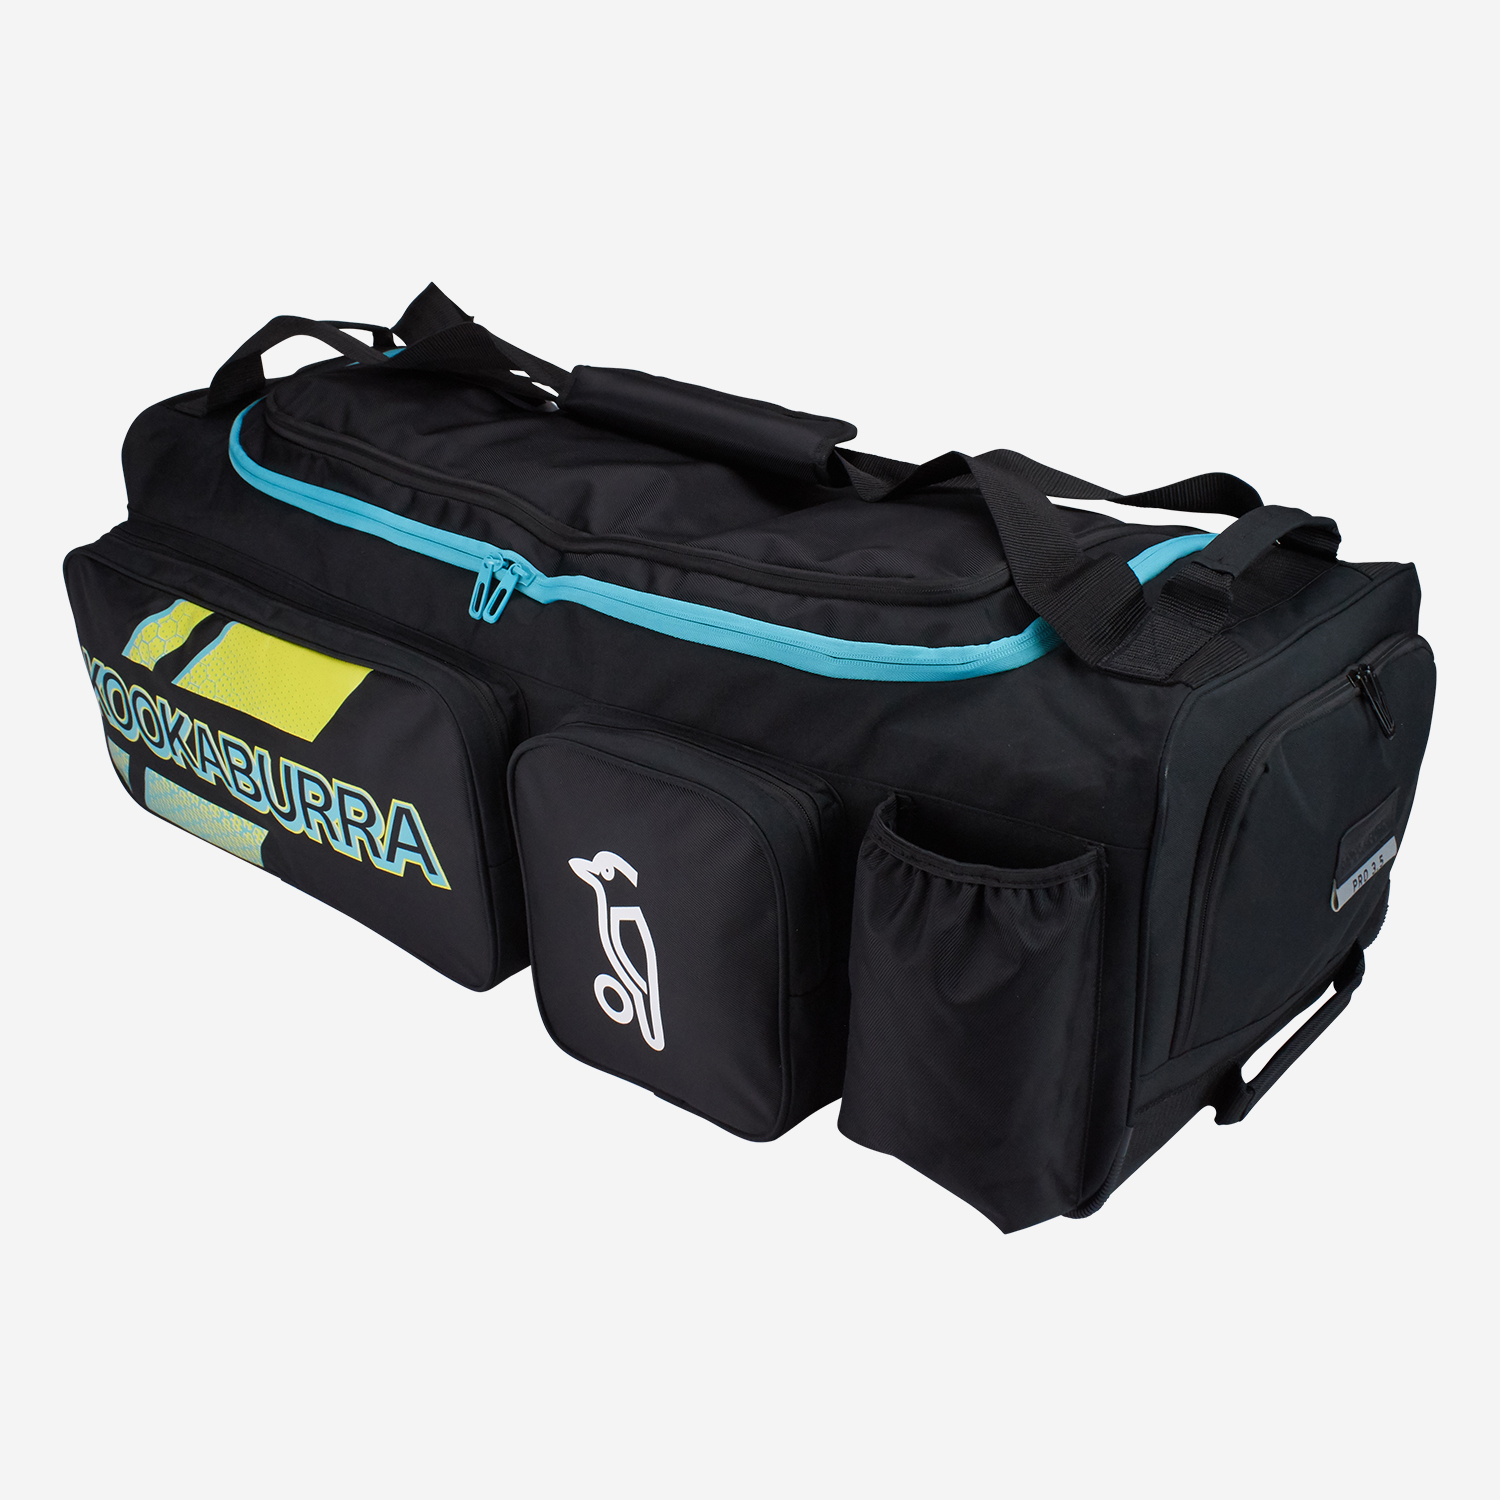 Kookaburra Pro 3.5 Wheelie bag